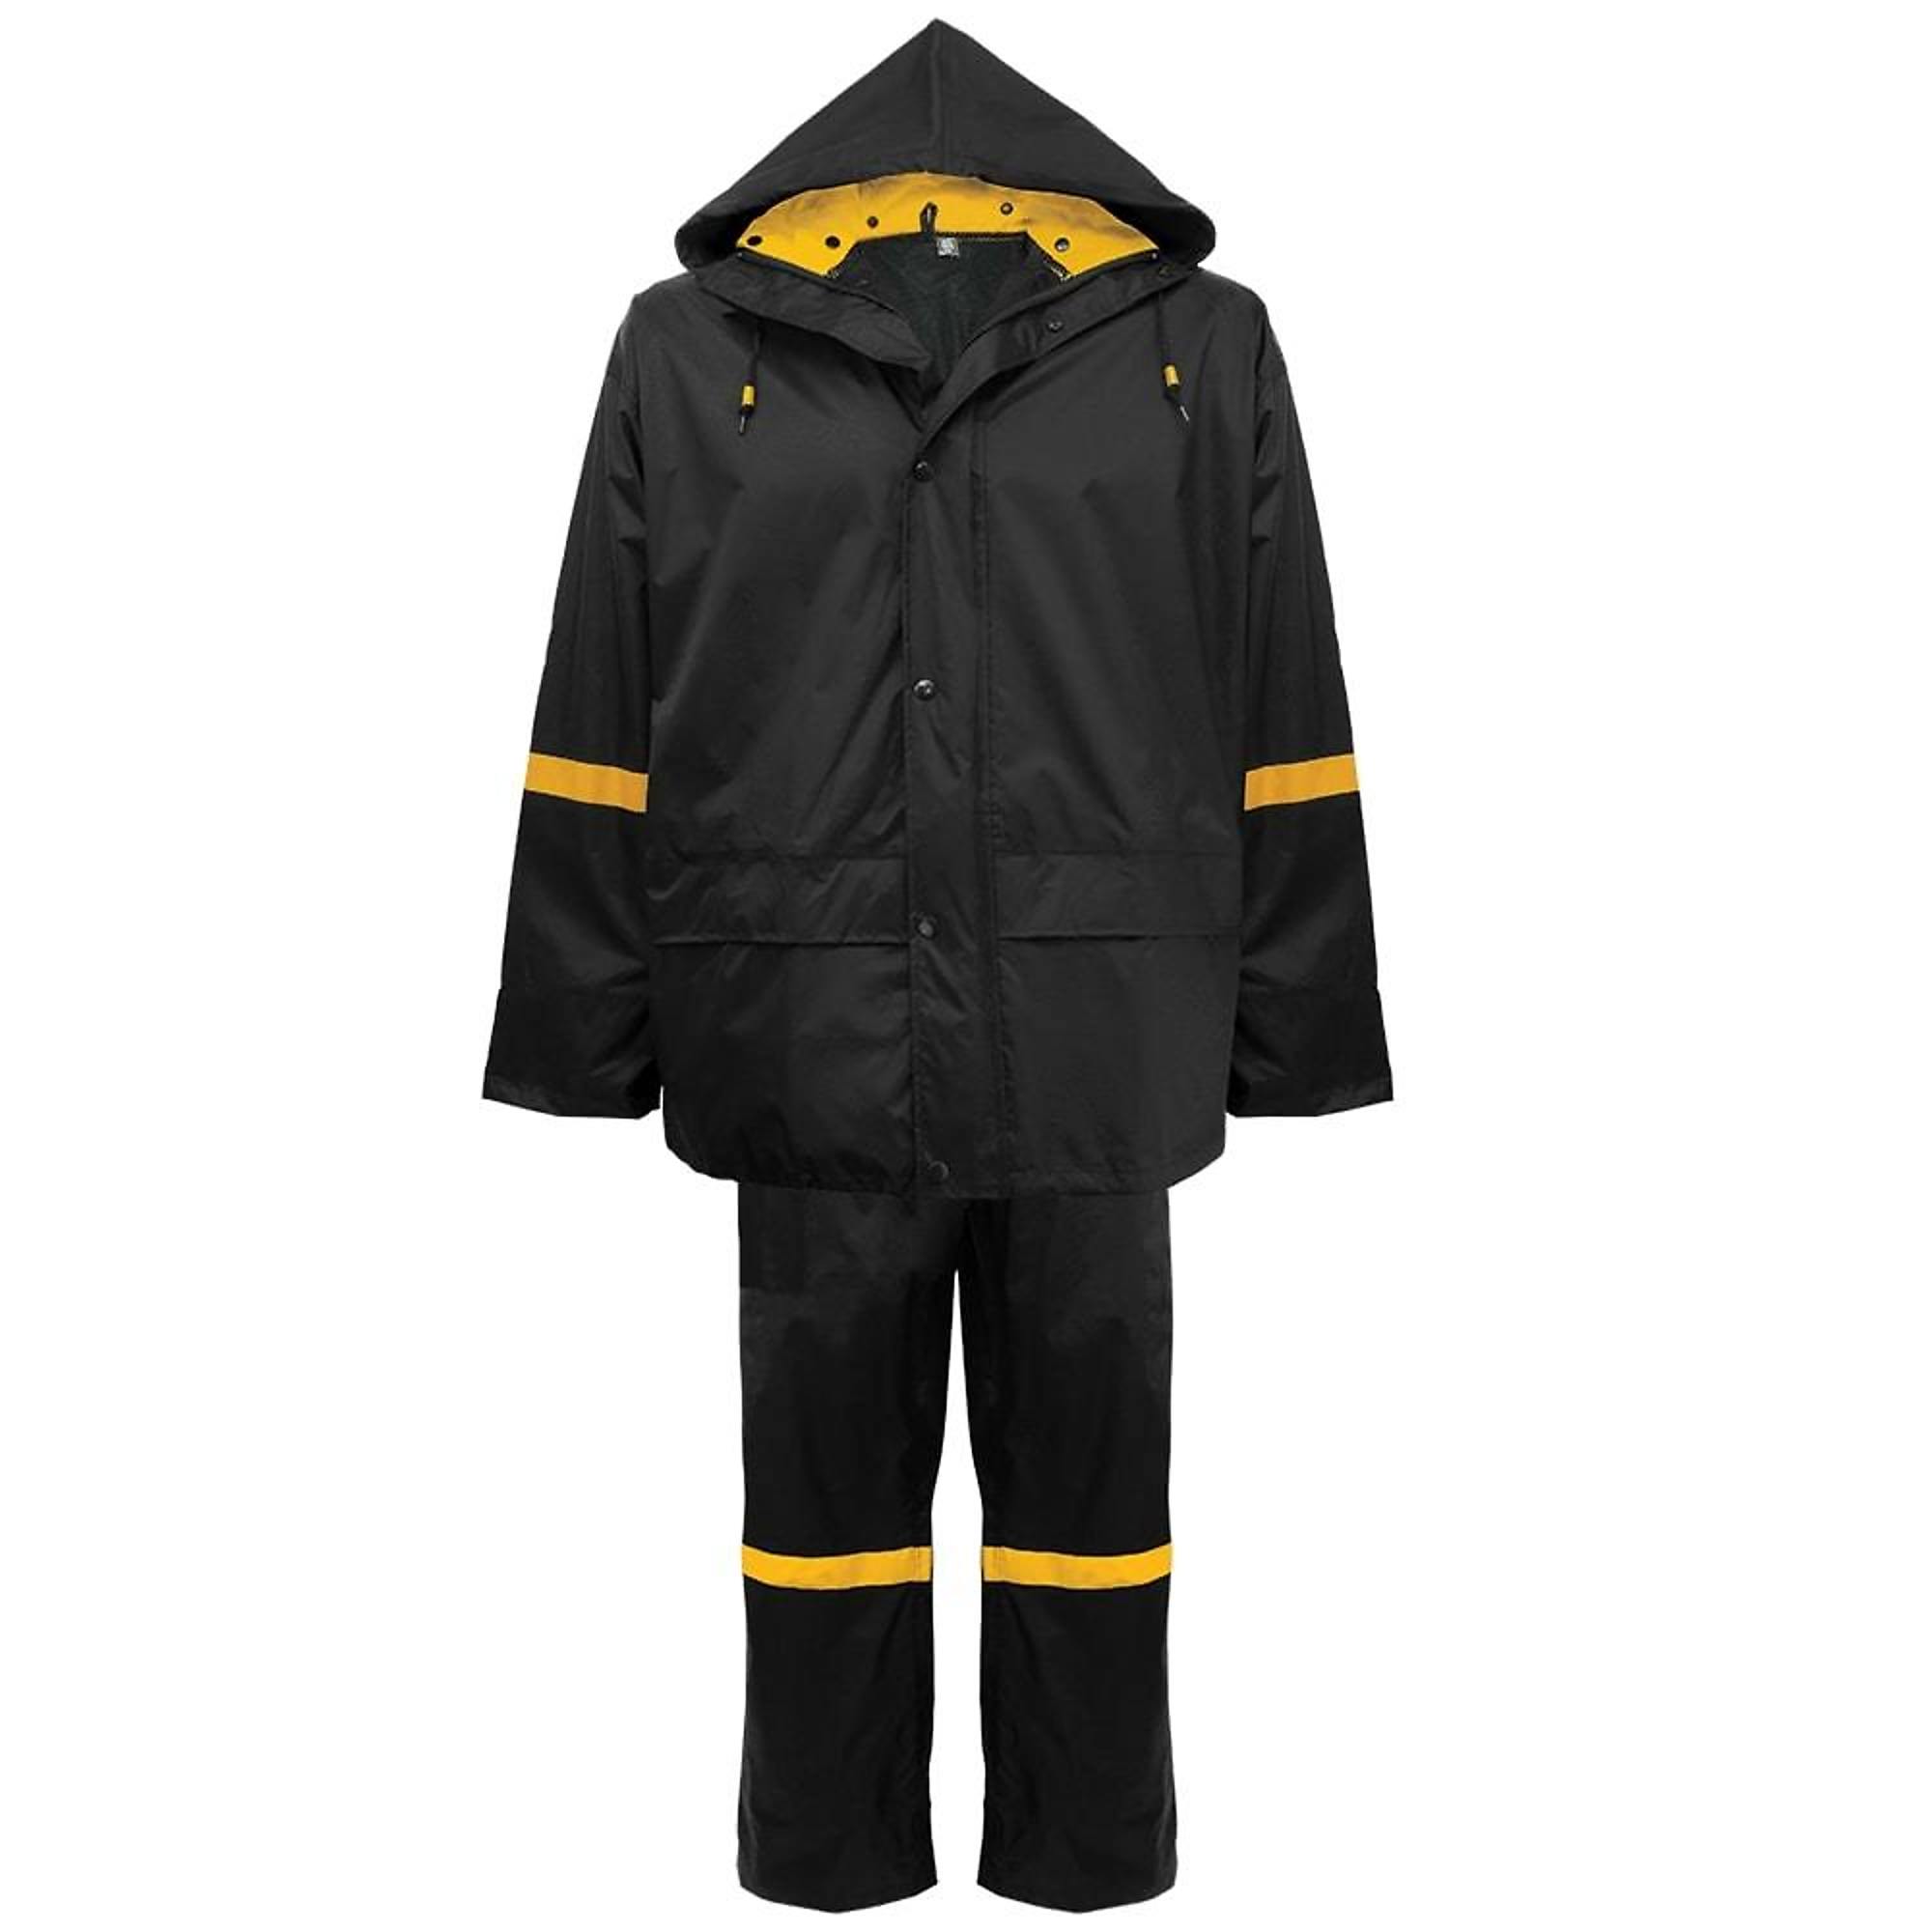 FrogWear, Black, PVC Coated, Nylon Three-Piece Rain Suit, Size XL, Color Black/Yellow, Model R6400-XL